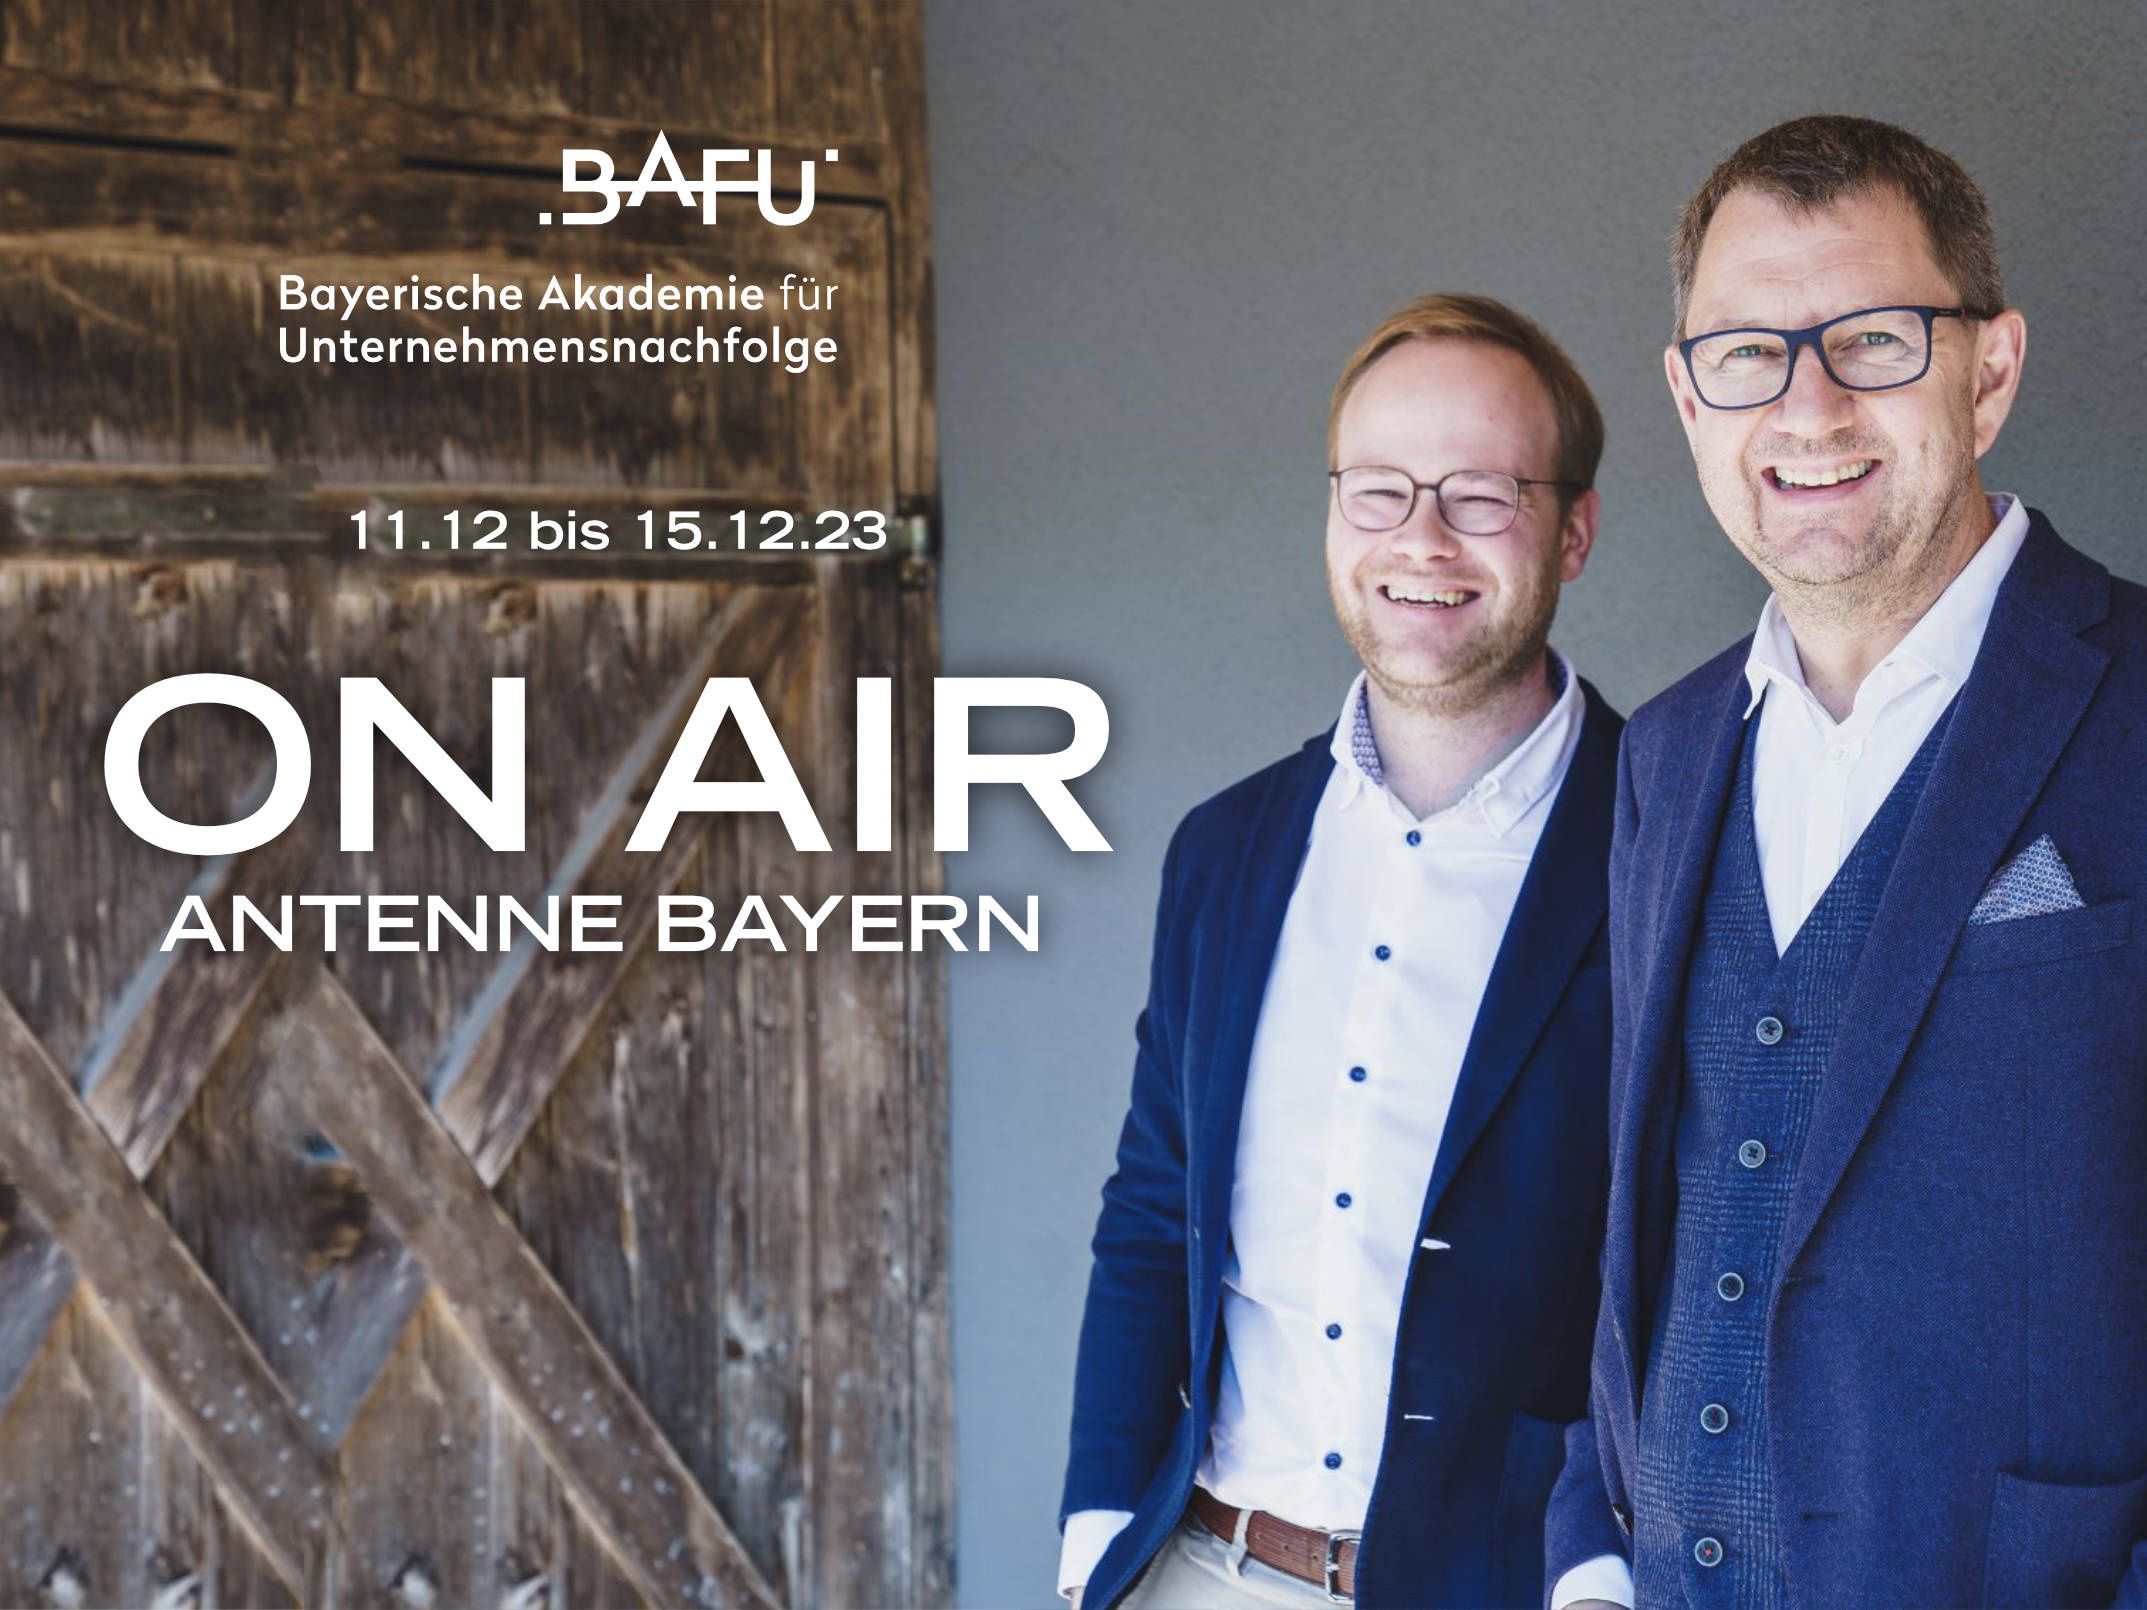 BAFU auf Antenne Bayern